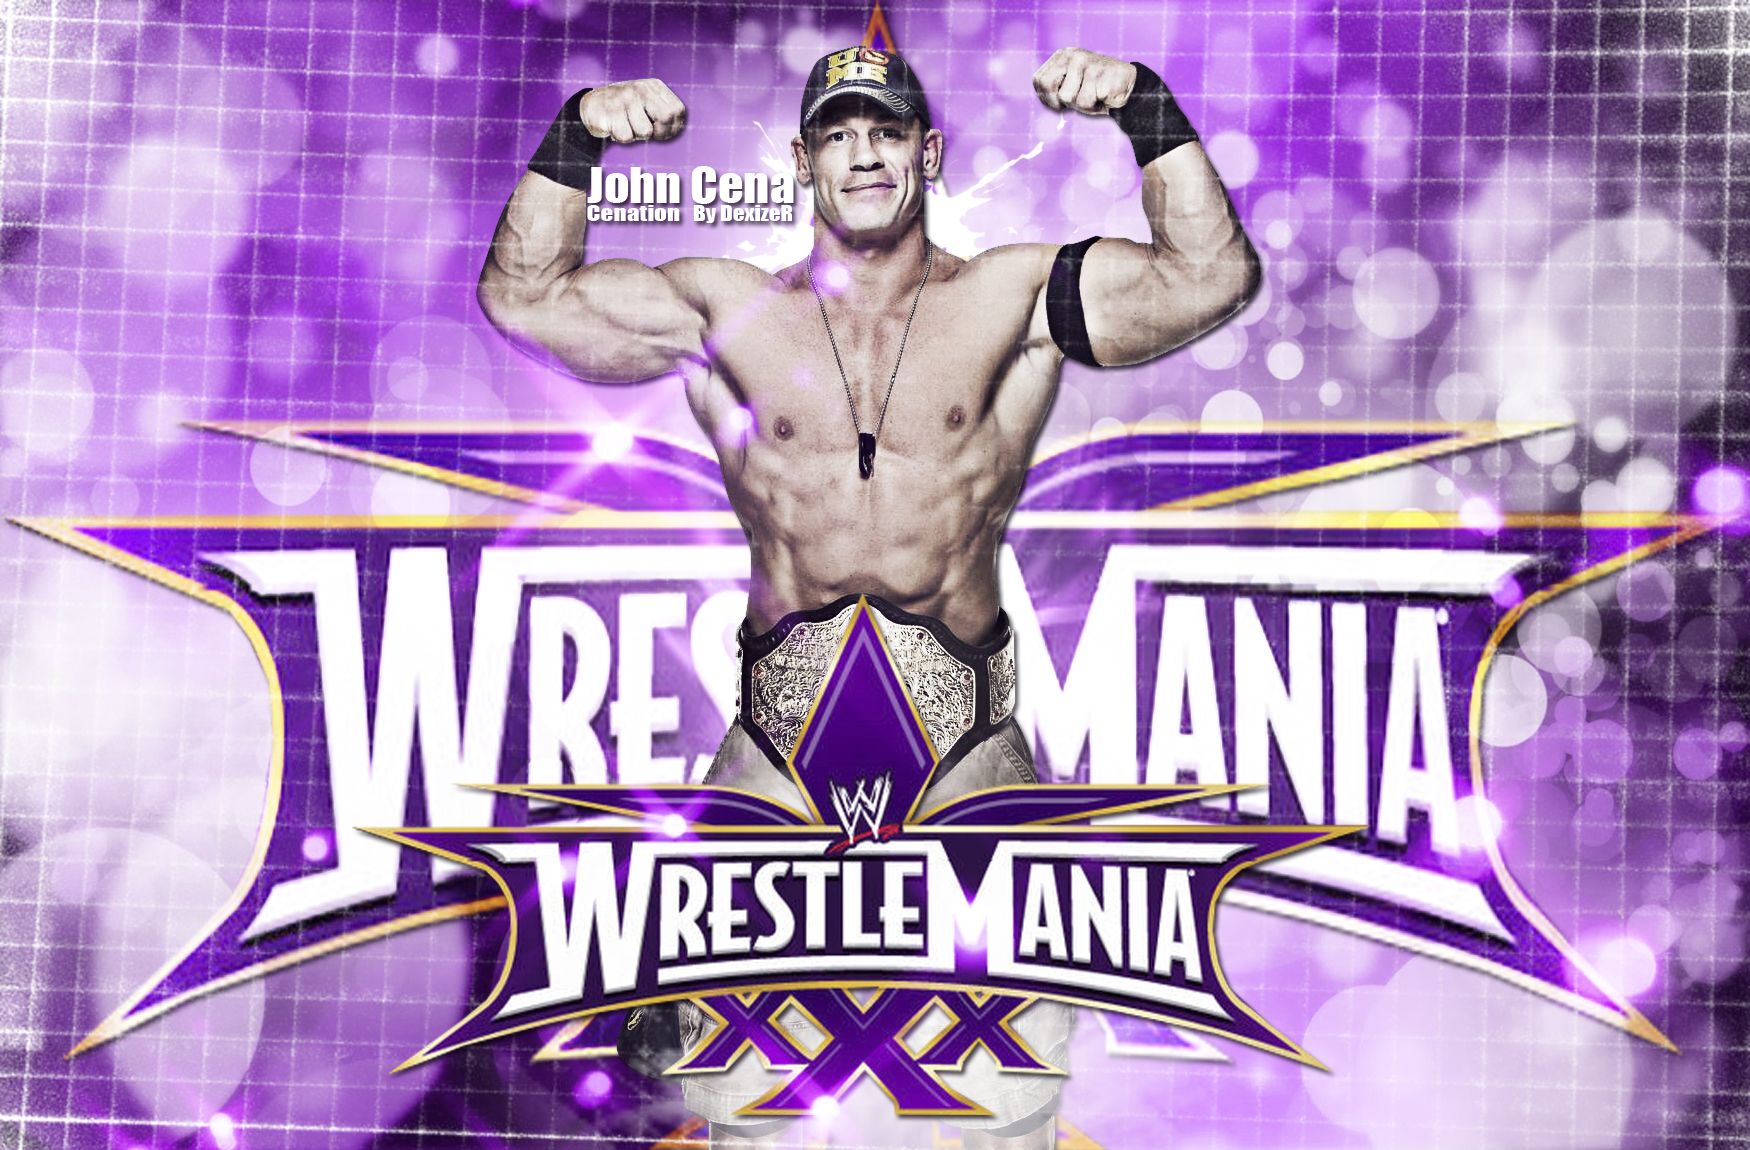 WWE John Cena Wrestlemania 30 2014 HD Wallpaper by SmileDexizeR on ...